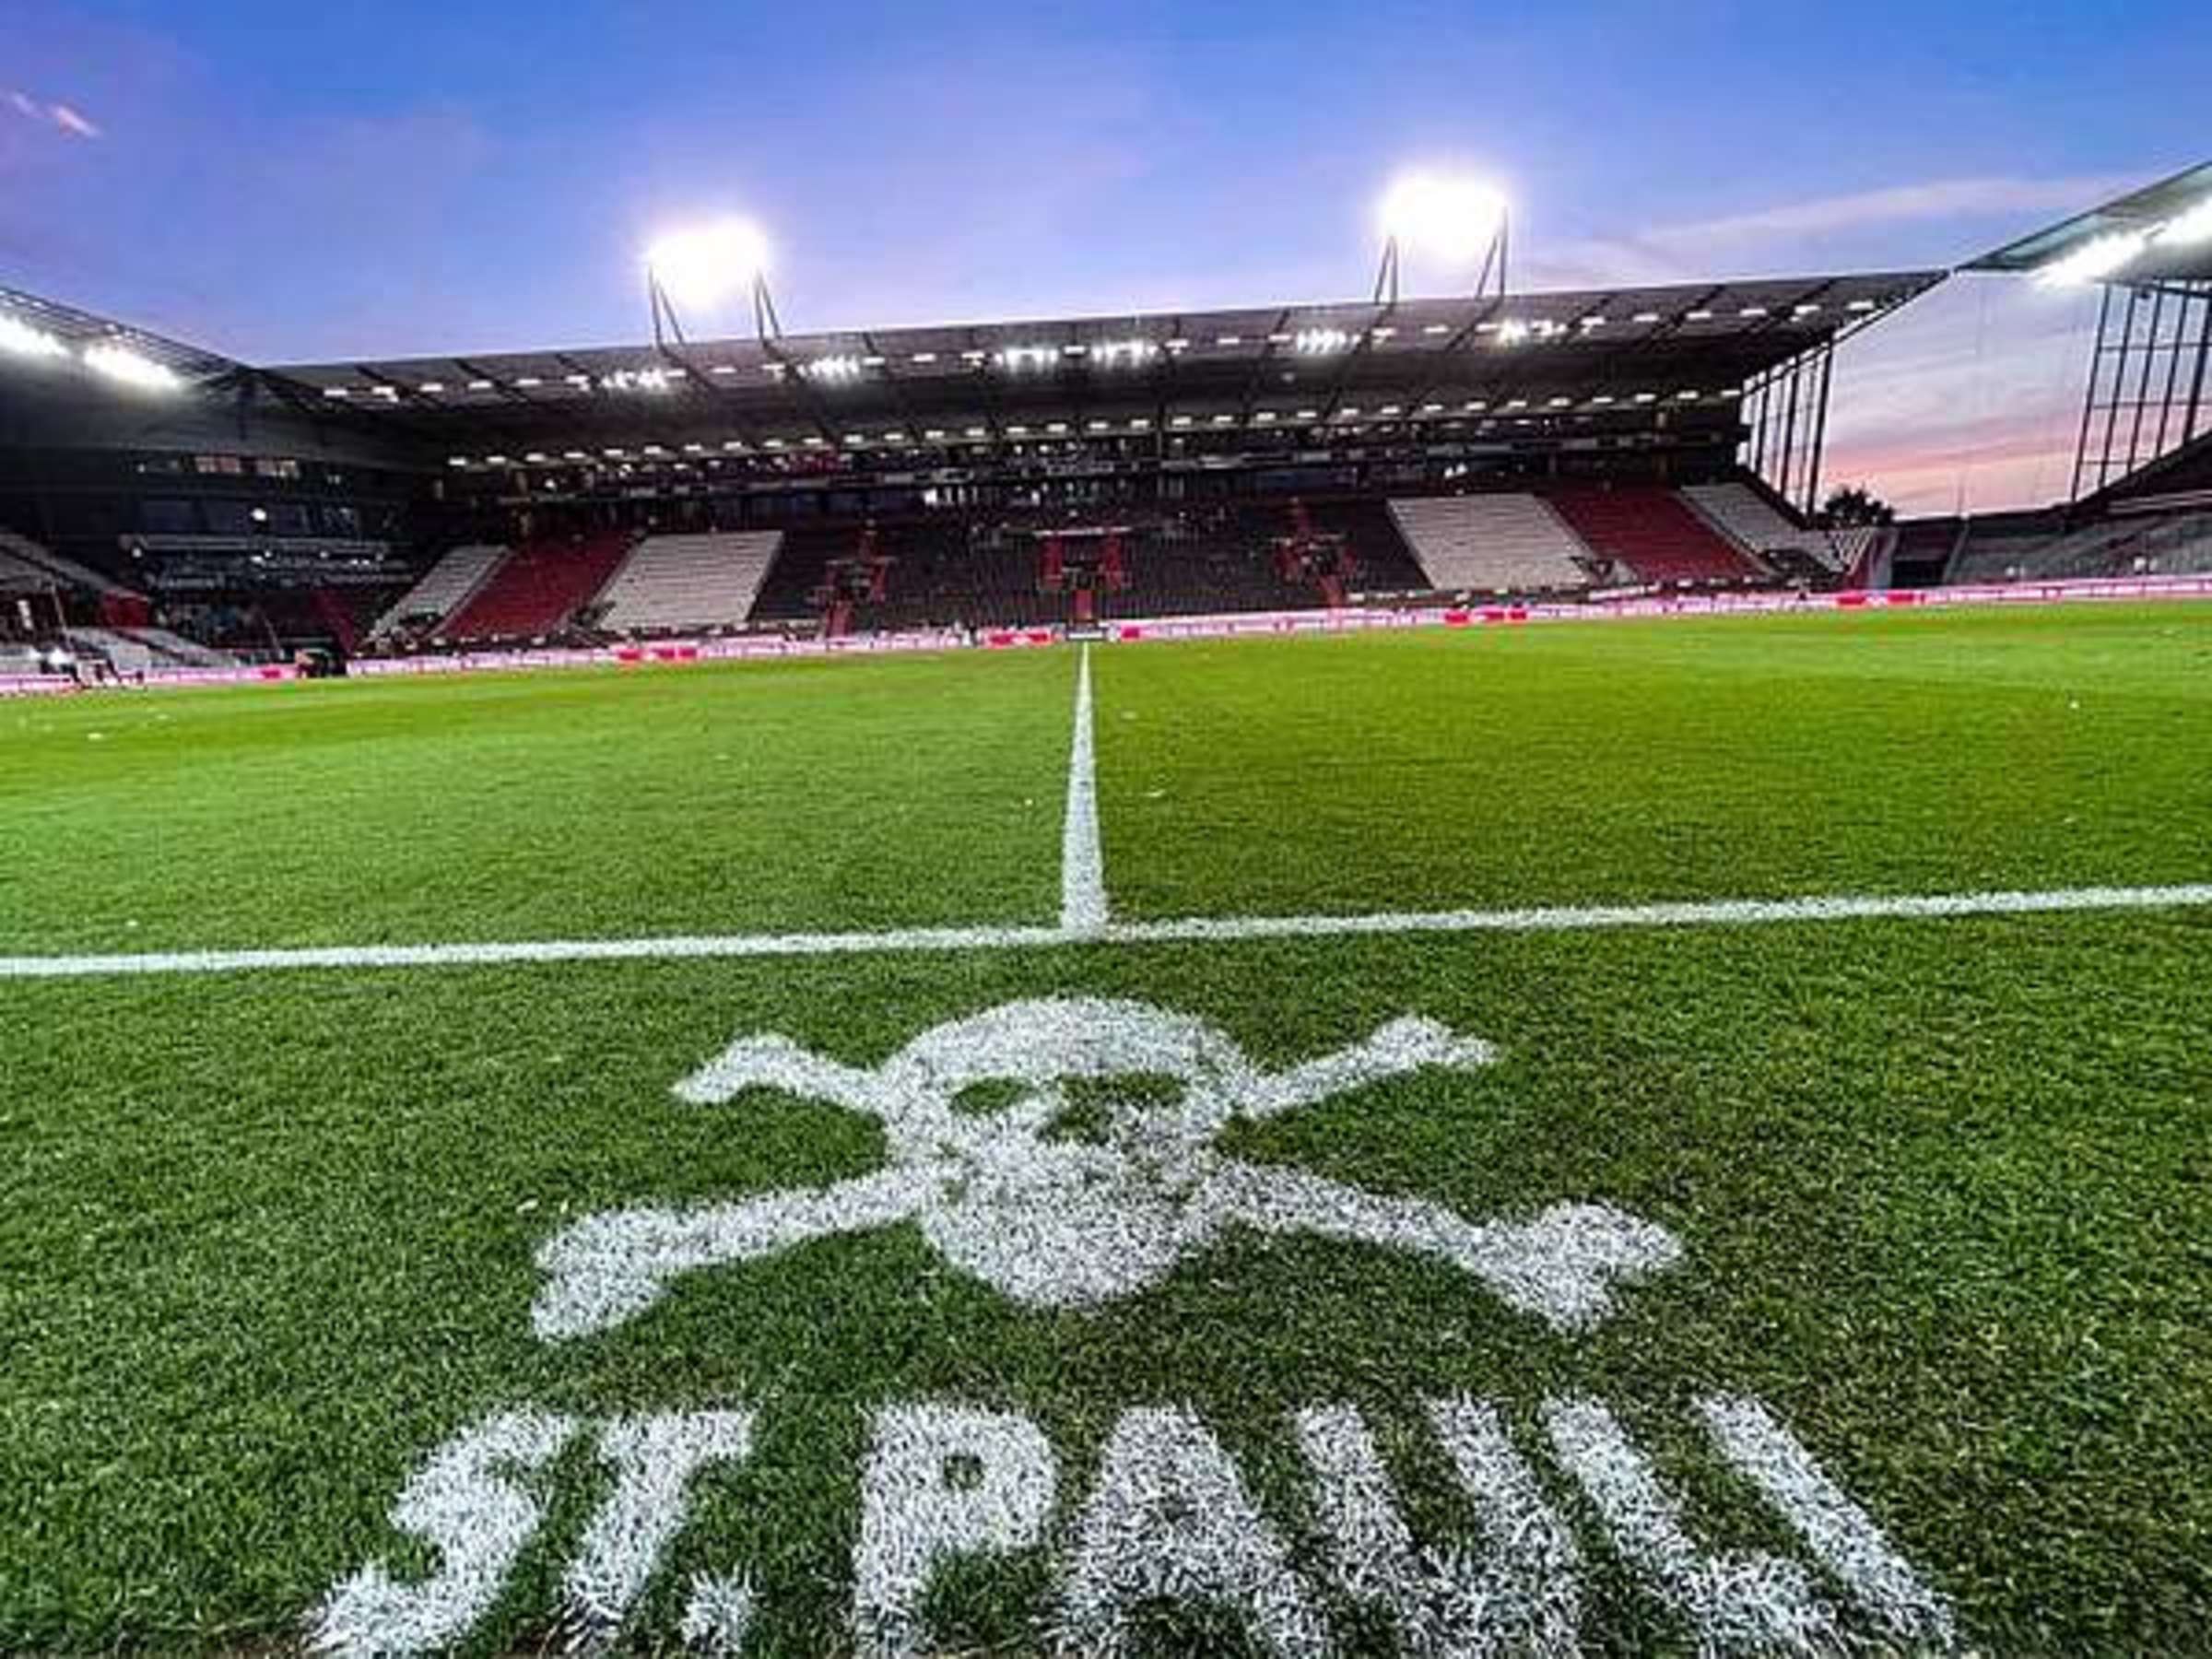  FC St Pauli Hintergrundbild 2400x1800. FC St. Pauli: Statt Rekordkulisse Tausende leere Plätze